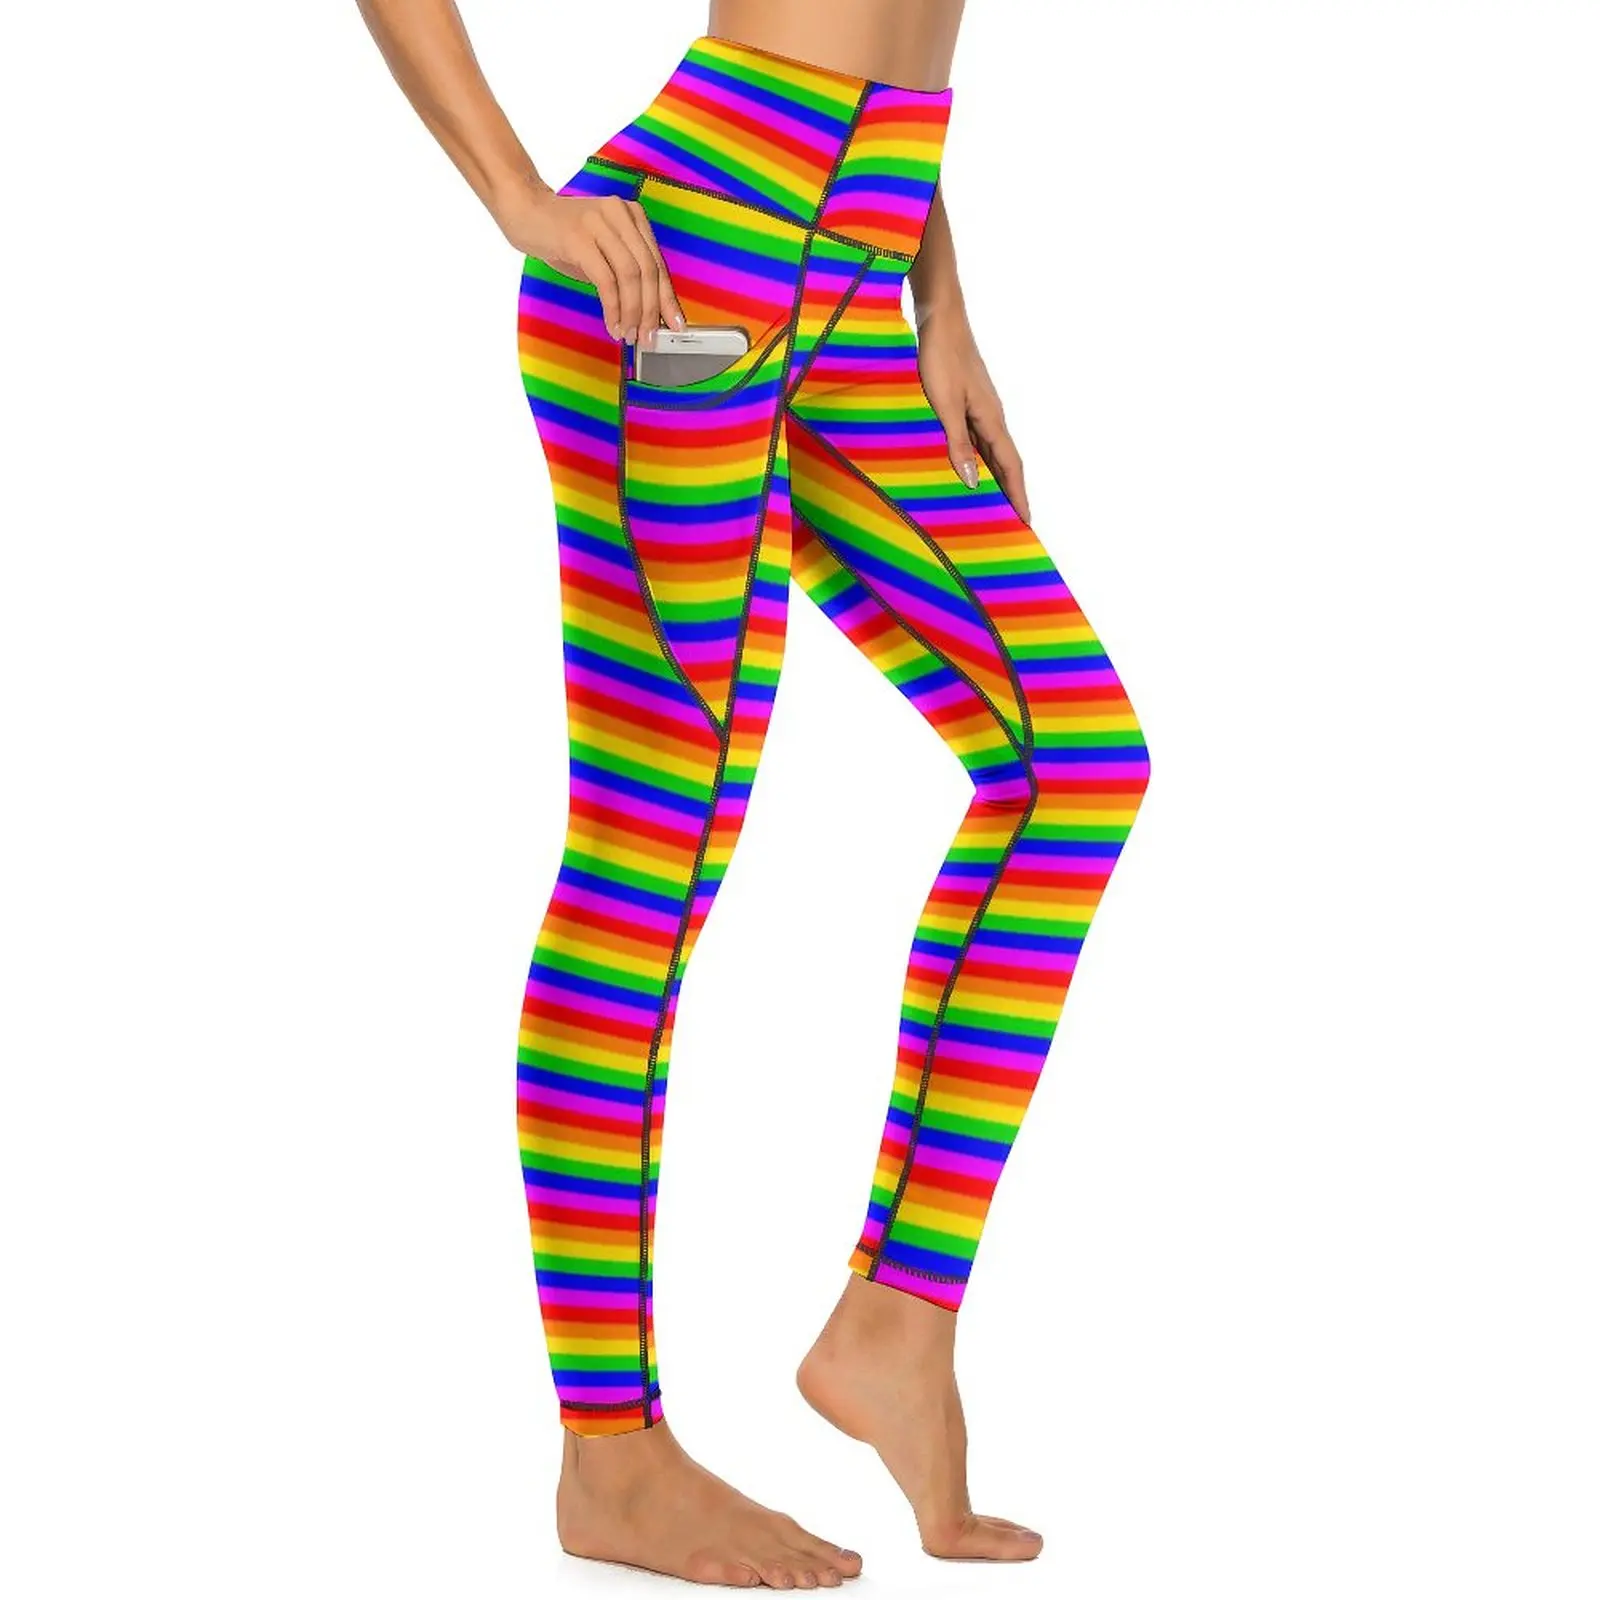 

Gay Rainbow Yoga Pants Sexy Transgender Rainbow Flag Printed Leggings High Waist Workout Leggins Novelty Stretch Sports Tights